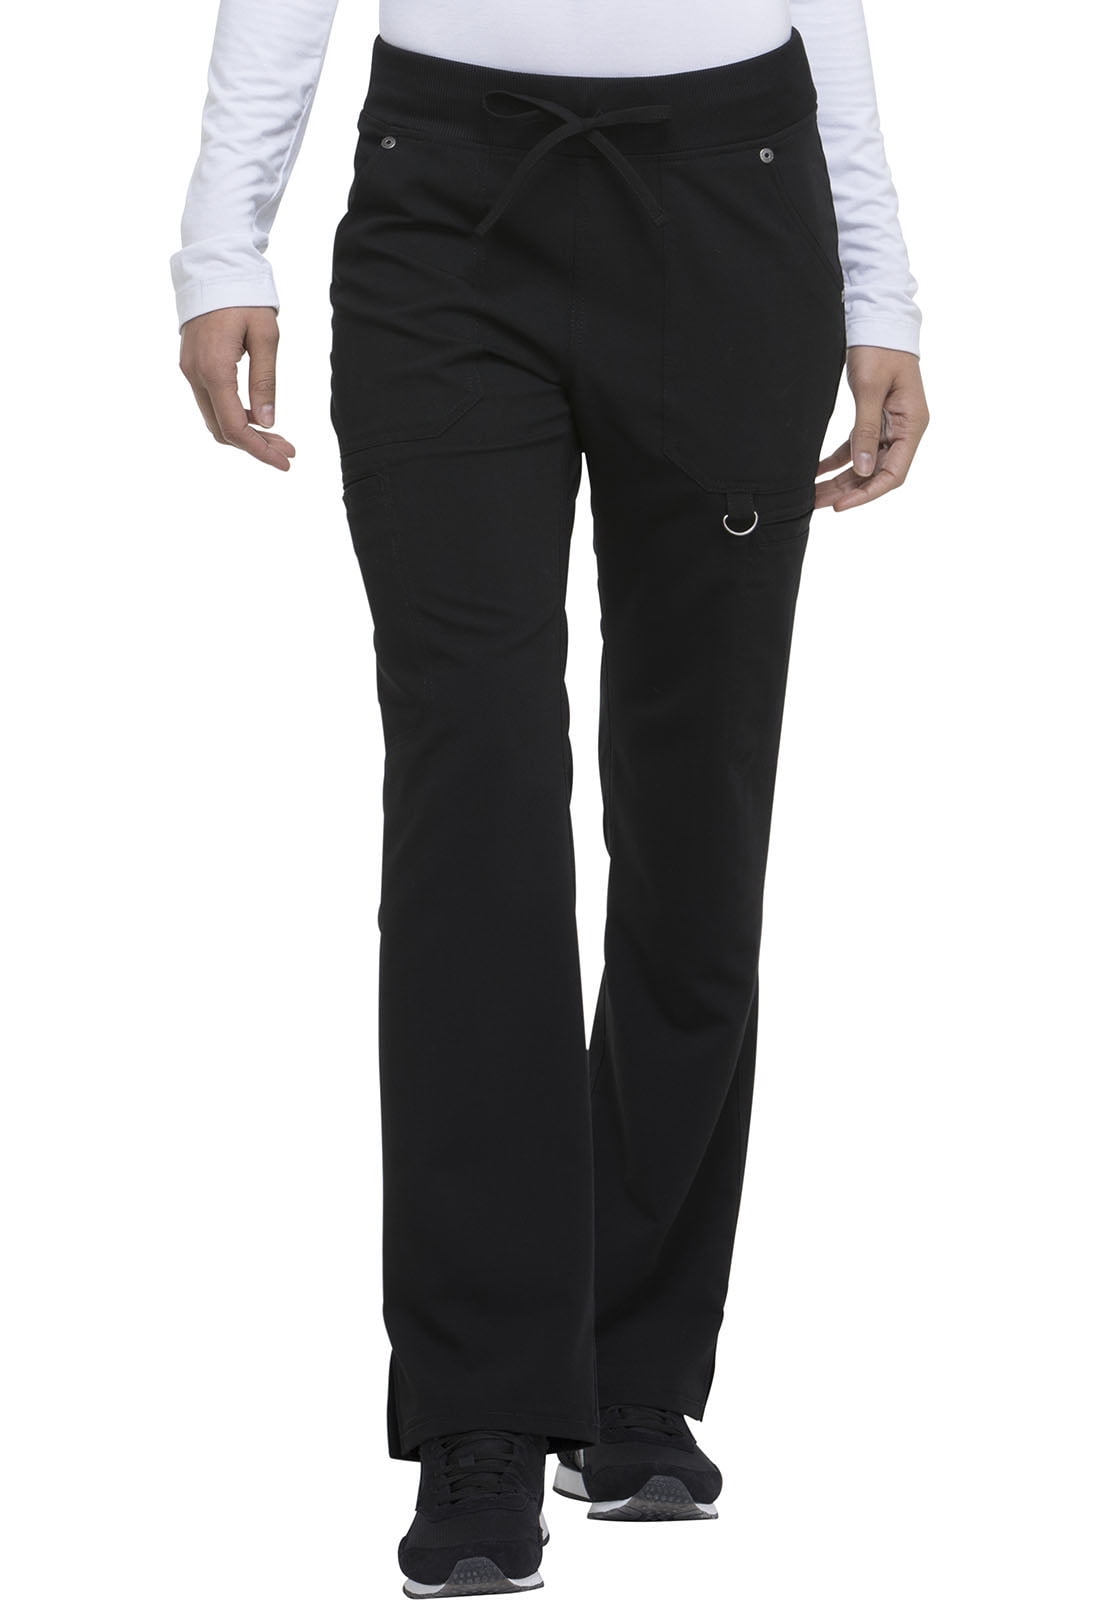 Dickies Xtreme Stretch Scrubs Pant for Women Mid Rise Rib Knit Waistband Plus Size DK020P, 2XL Petite, Black